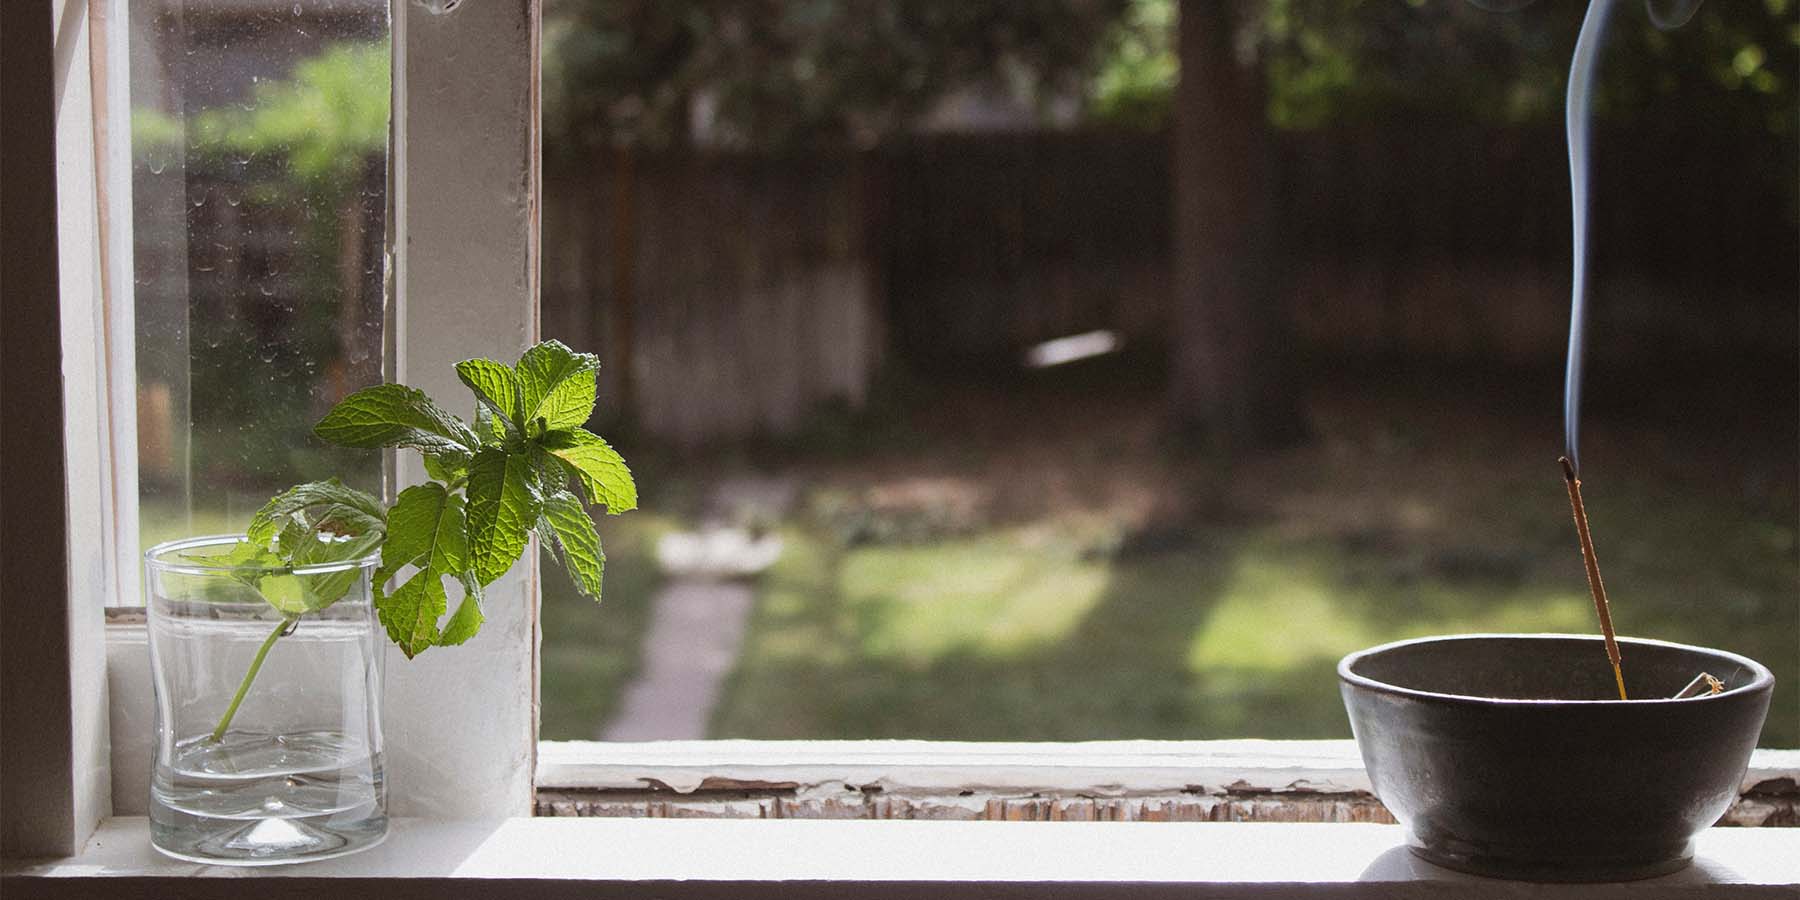 incense and mint leaf on a windowsill